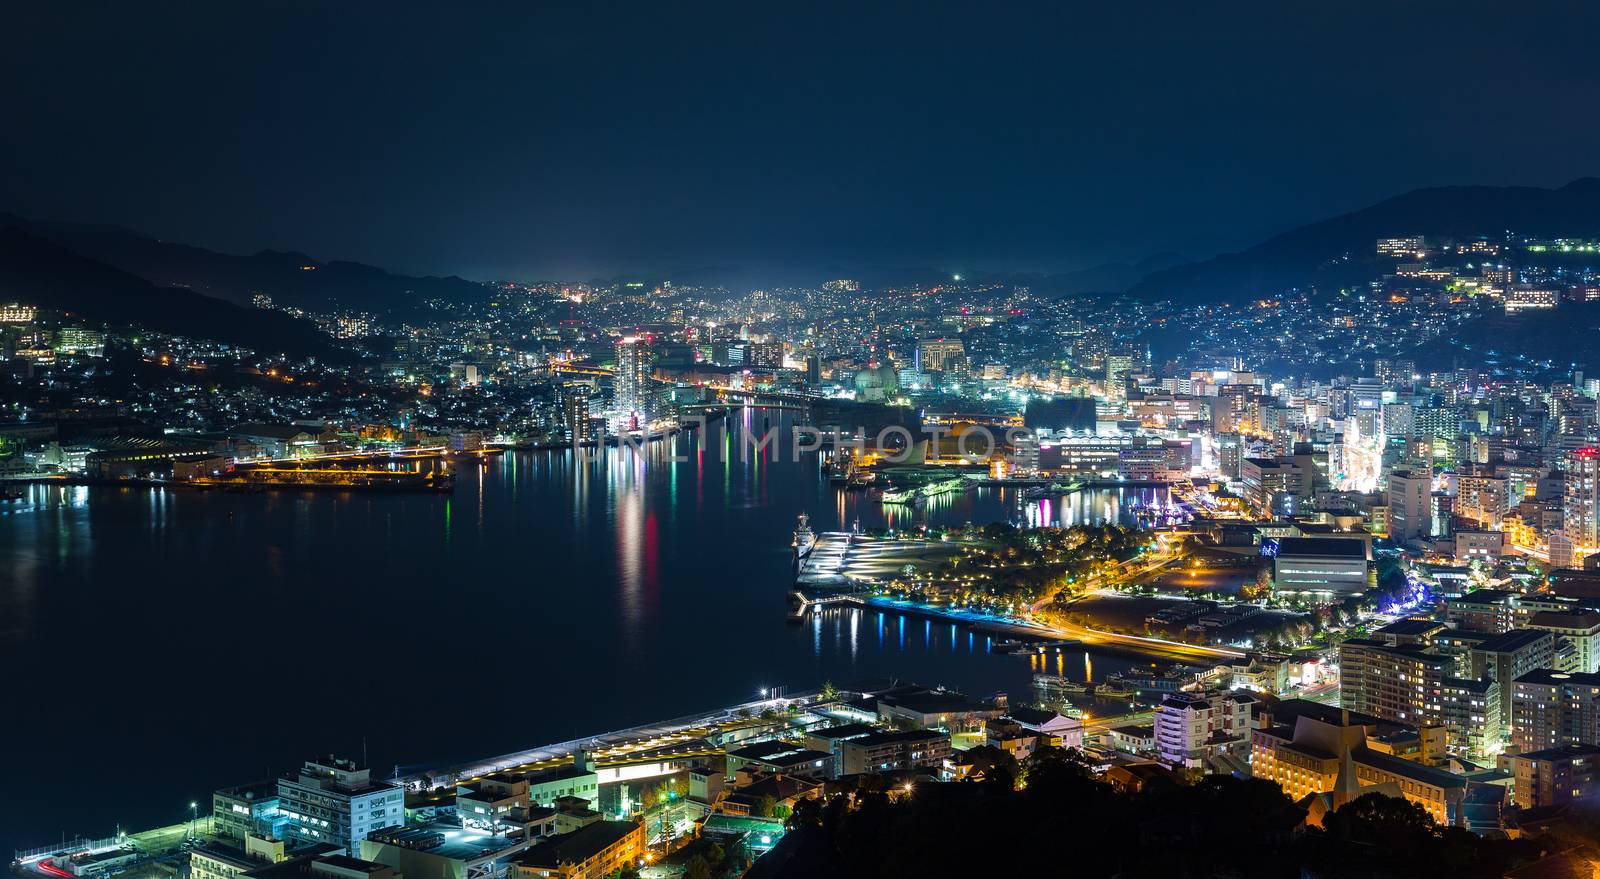 Night shot of Nagasaki city in Japan by leungchopan